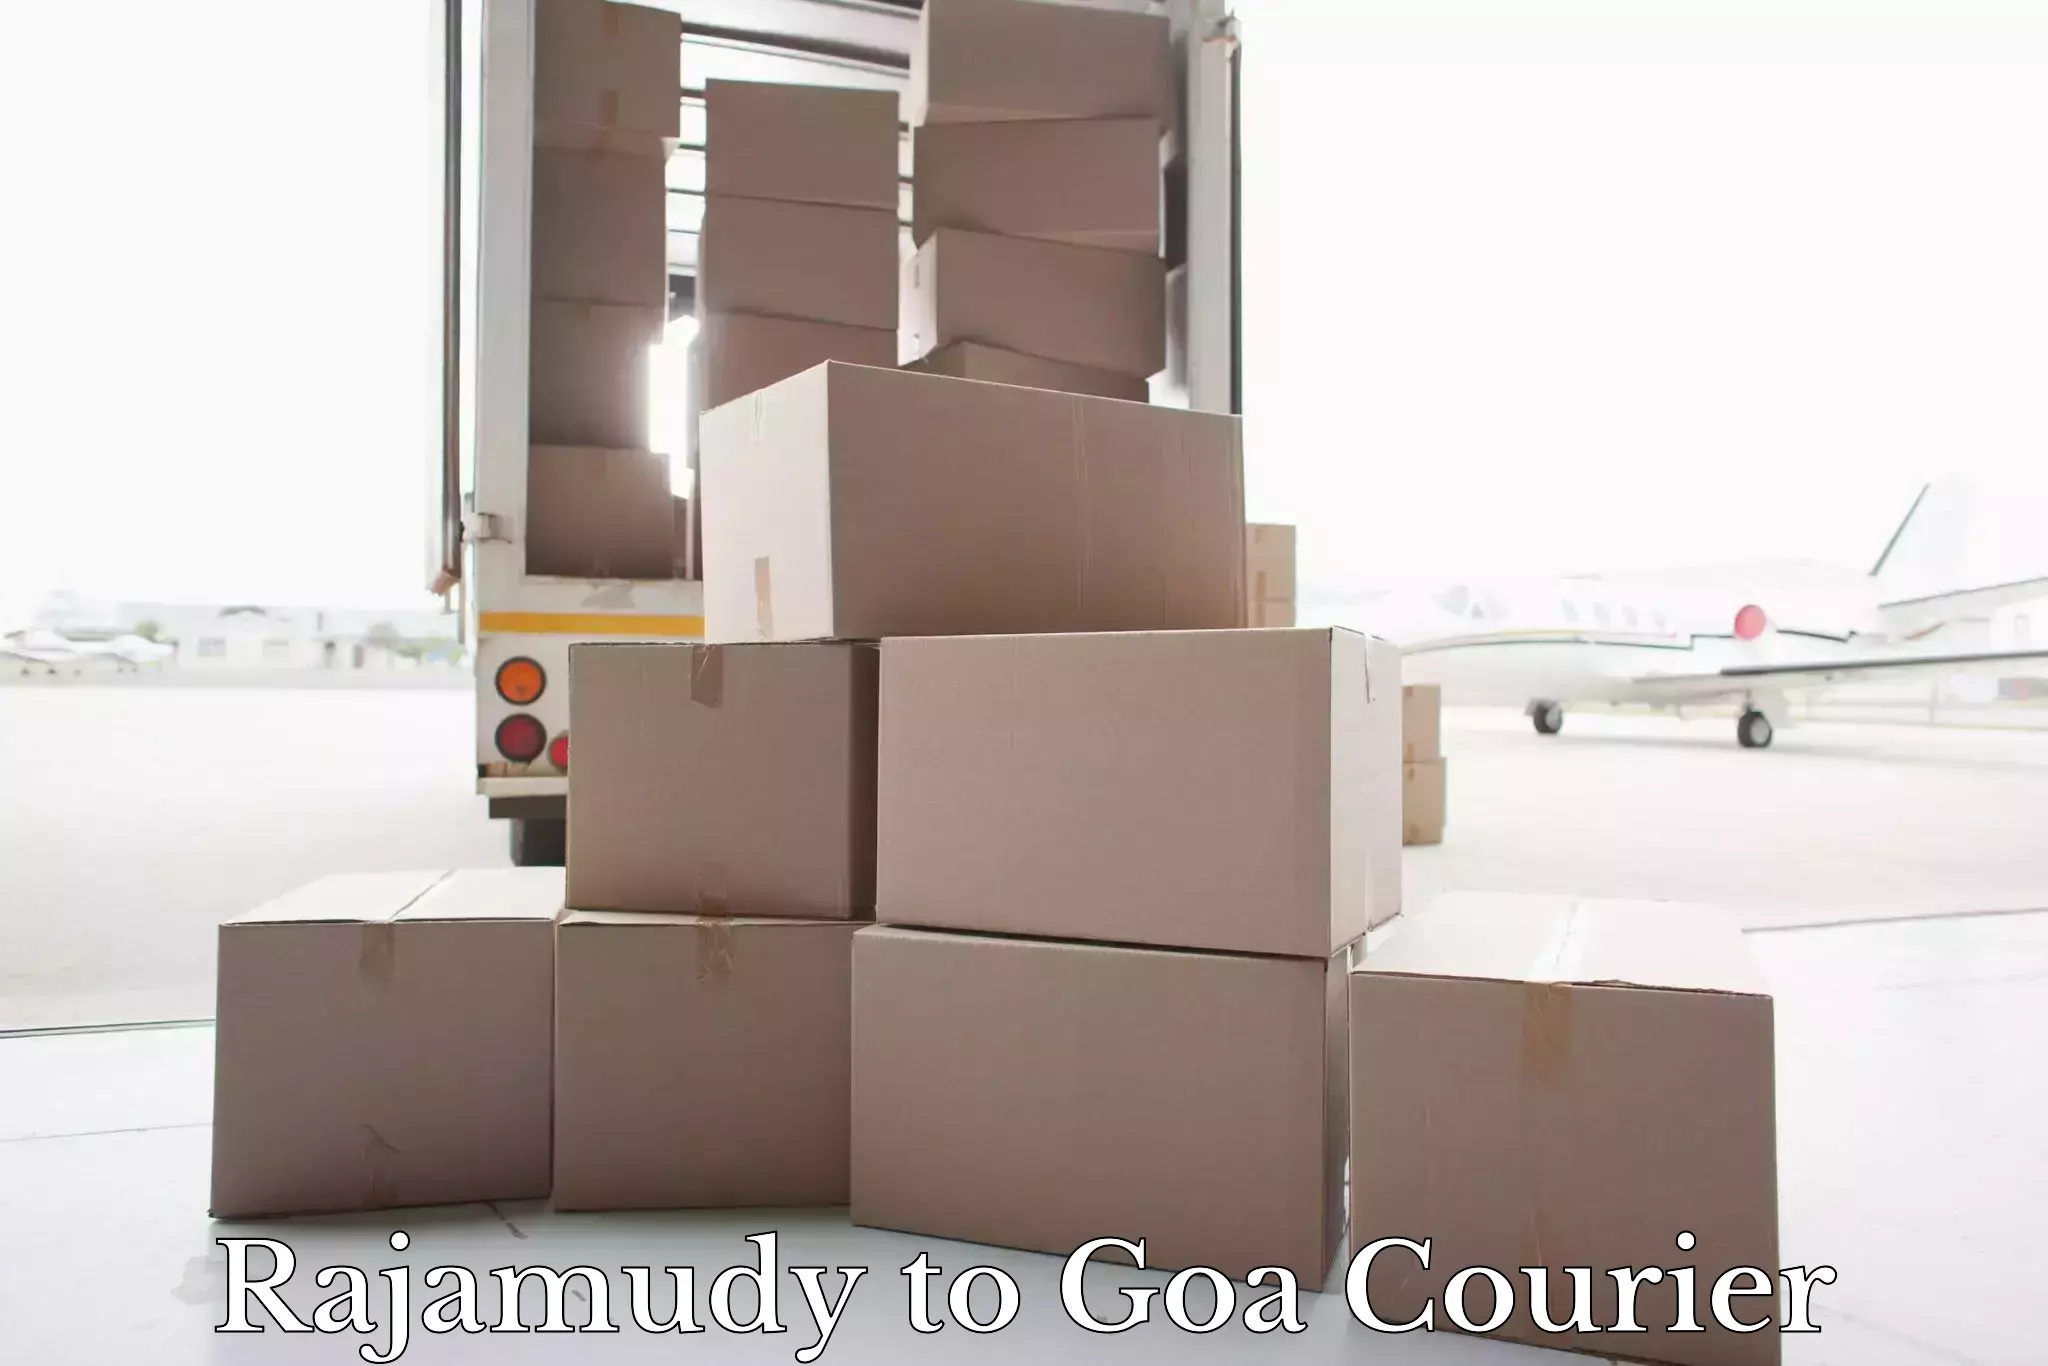 Urgent luggage shipment Rajamudy to Goa